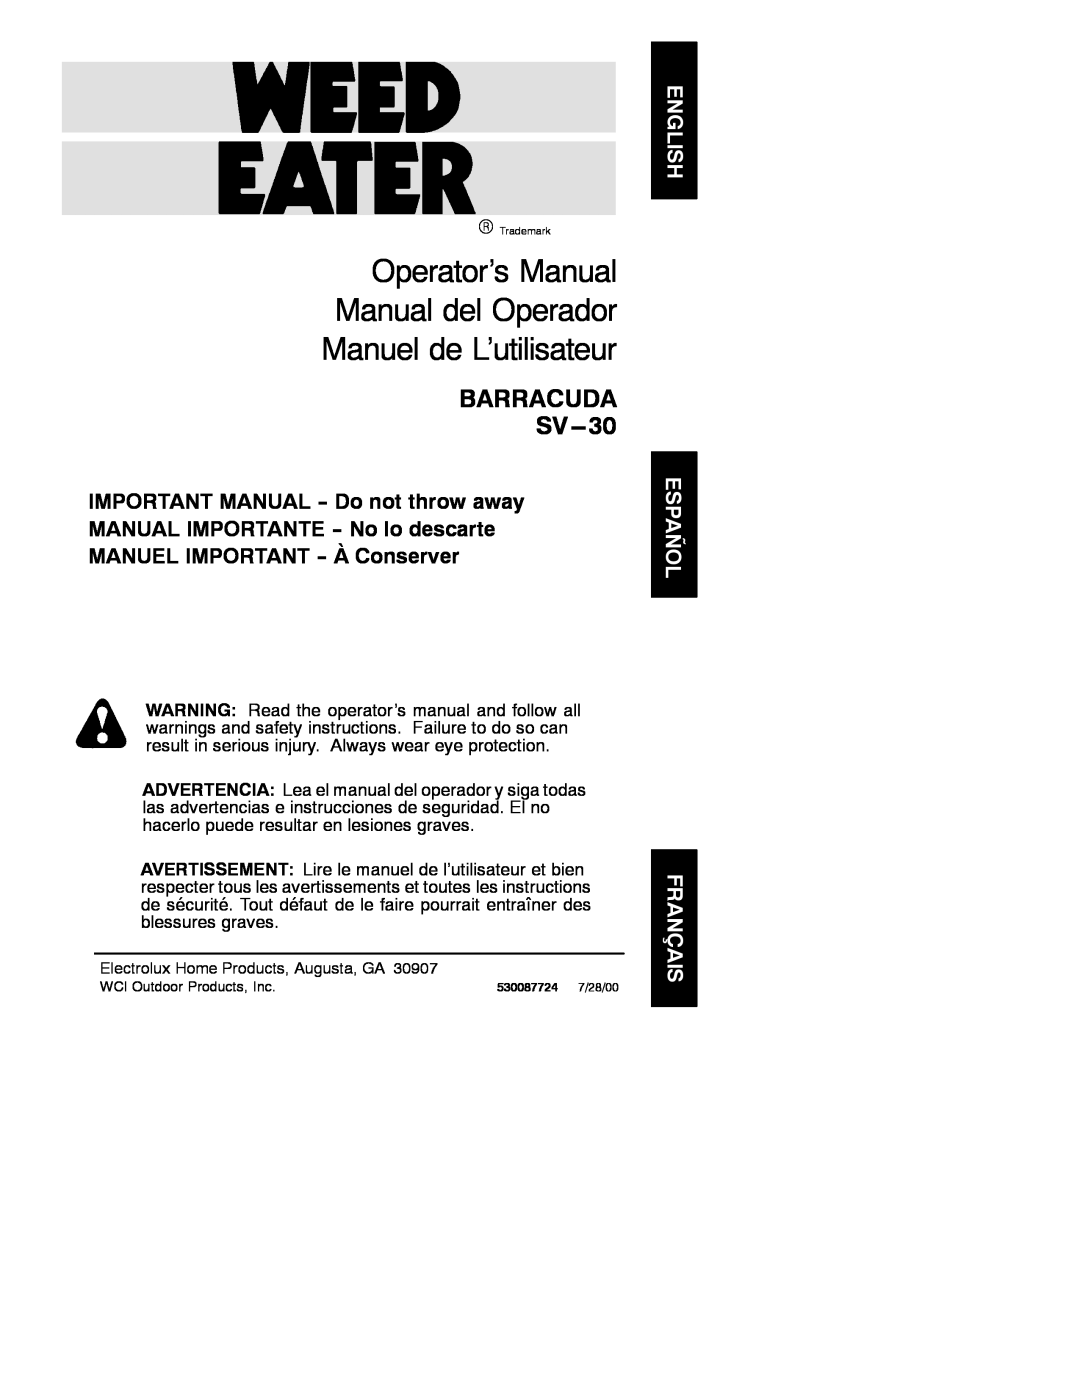 Weed Eater 530087724 manual Operator’s Manual Manual del Operador Manuel de L’utilisateur, BARRACUDA SV---30 